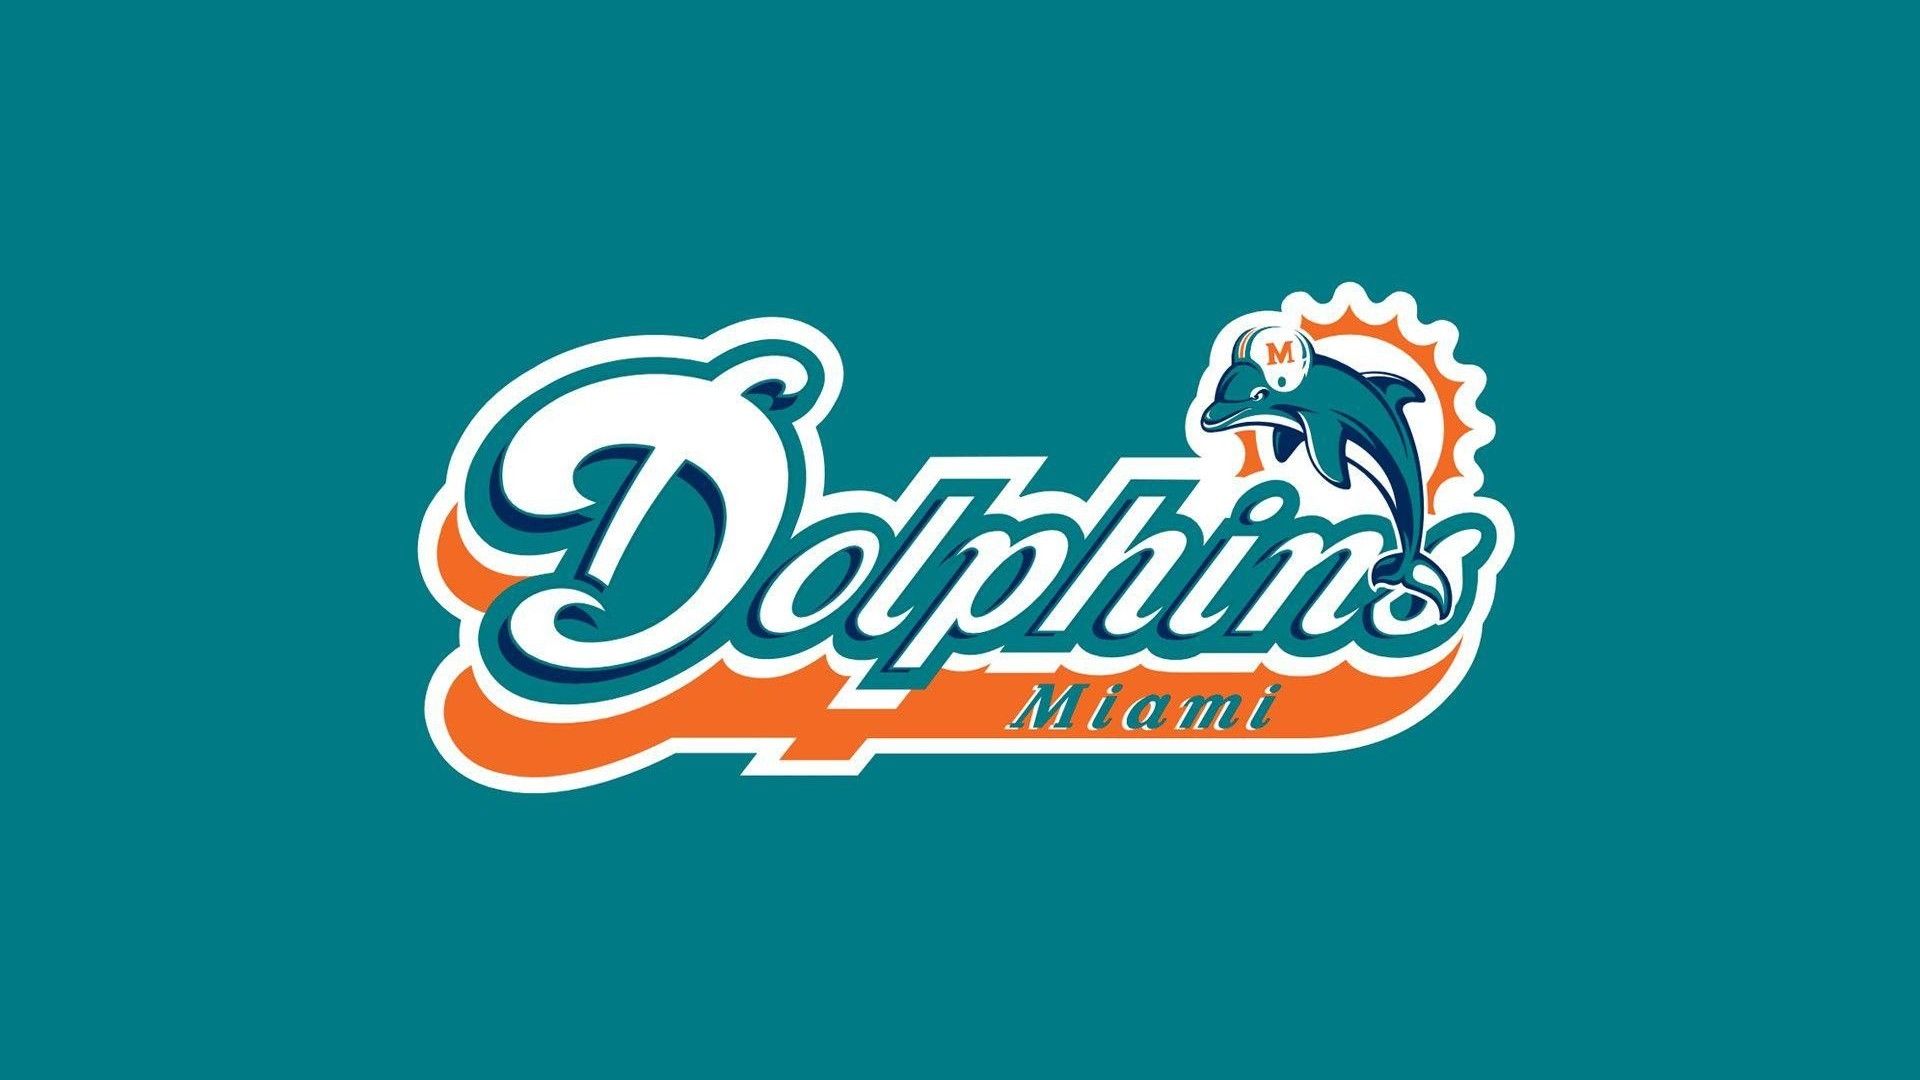 Miami Dolphins Wallpaper NFL Football Wallpaper. Miami dolphins wallpaper, Nfl football wallpaper, Miami dolphins